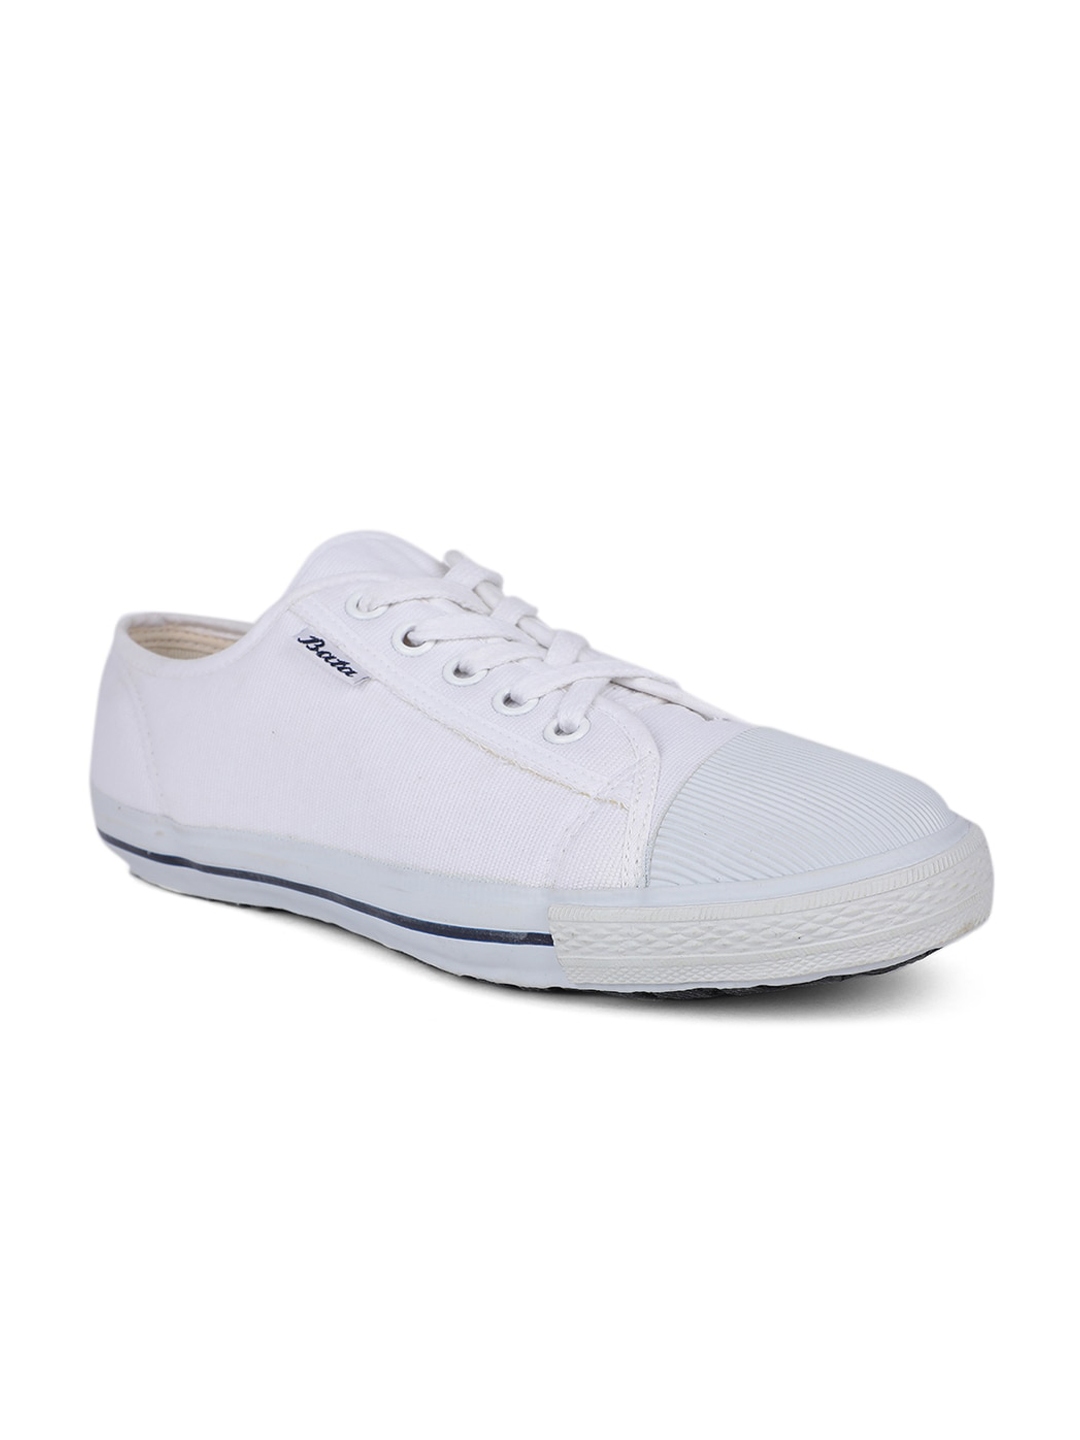 Buy Bata Men White Sneakers - Casual Shoes for Men 15512438 | Myntra